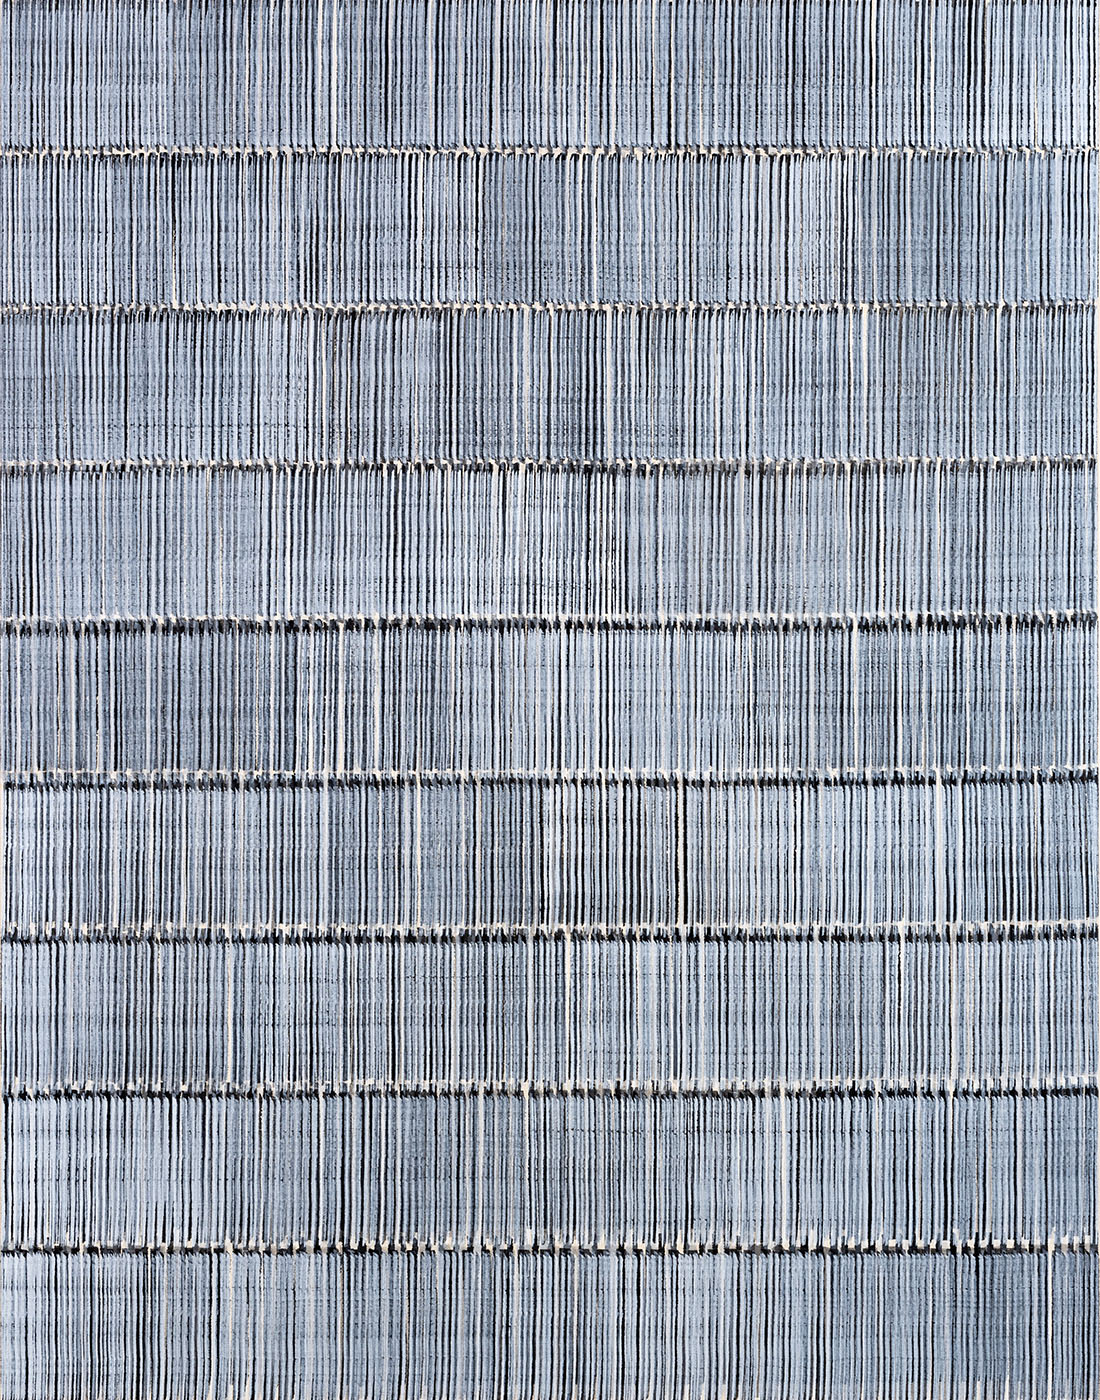 Nikola Dimitrov, Fuge VI, 2021, Pigmente, Bindemittel auf Leinwand, 140 × 110 cm